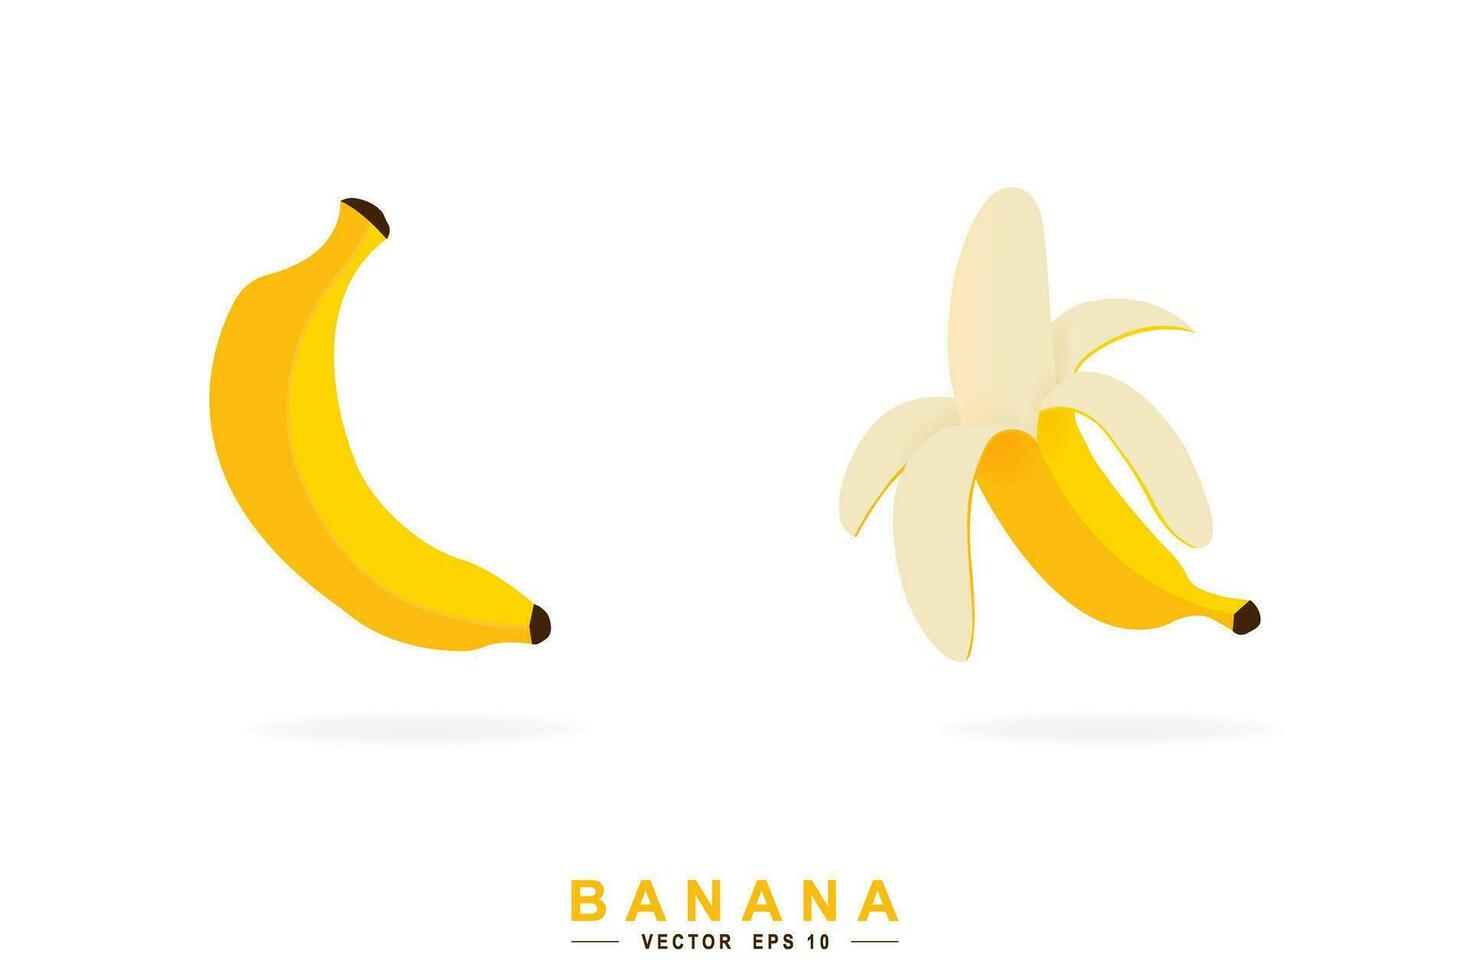 Cartoon style banana and peeled banana. Vegetarian diet. Isolated vector illustration.